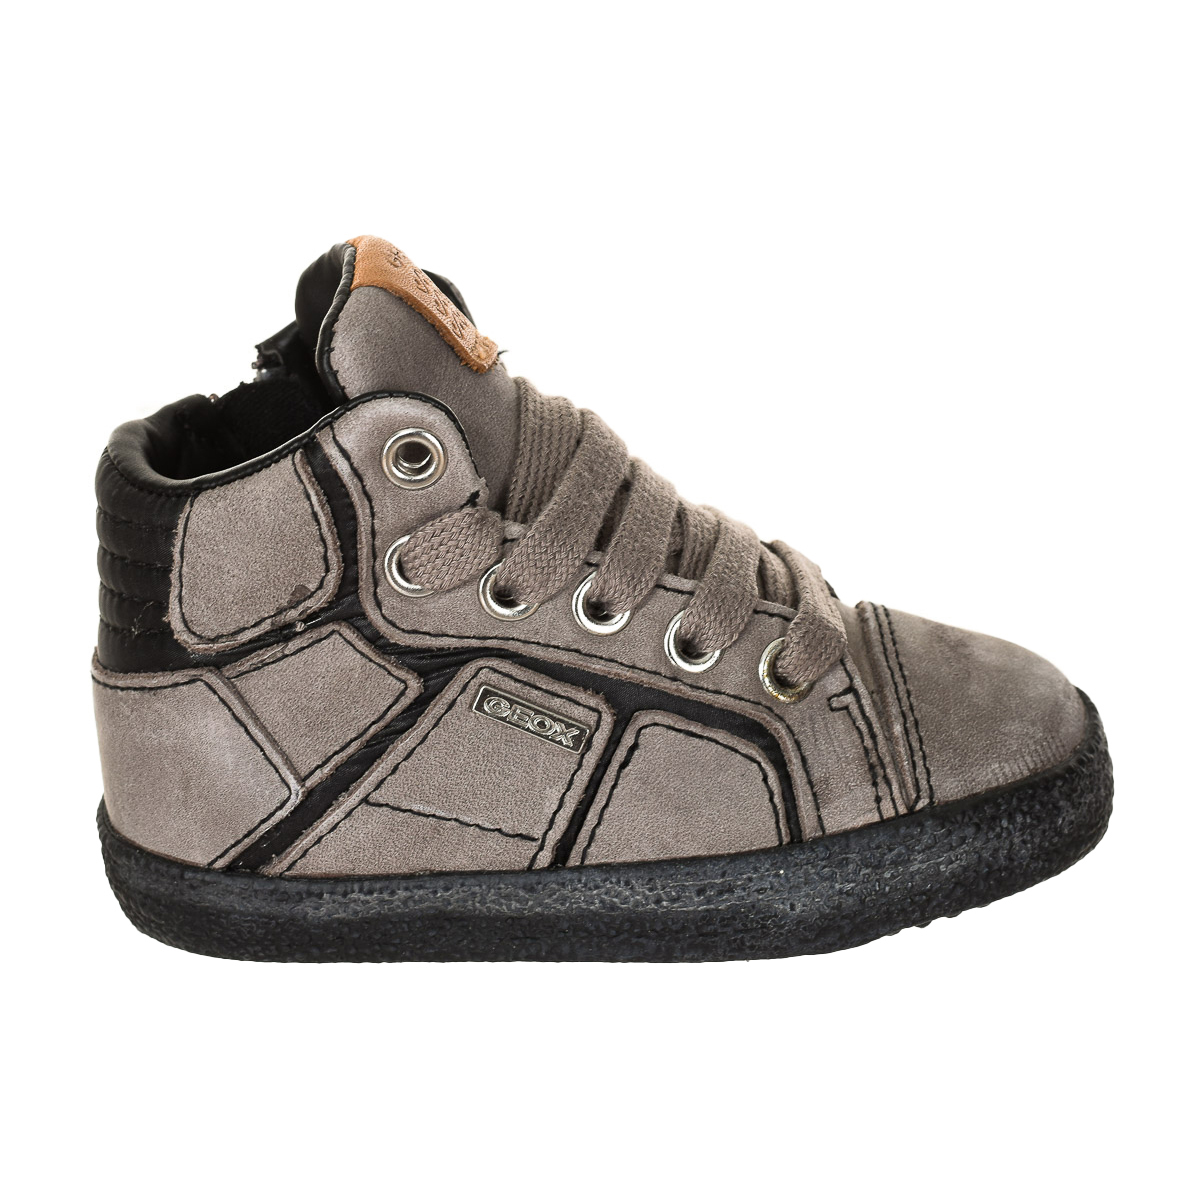 Sneaker Abotinado Geox B44a7c-0cl11 - Marron  MKP